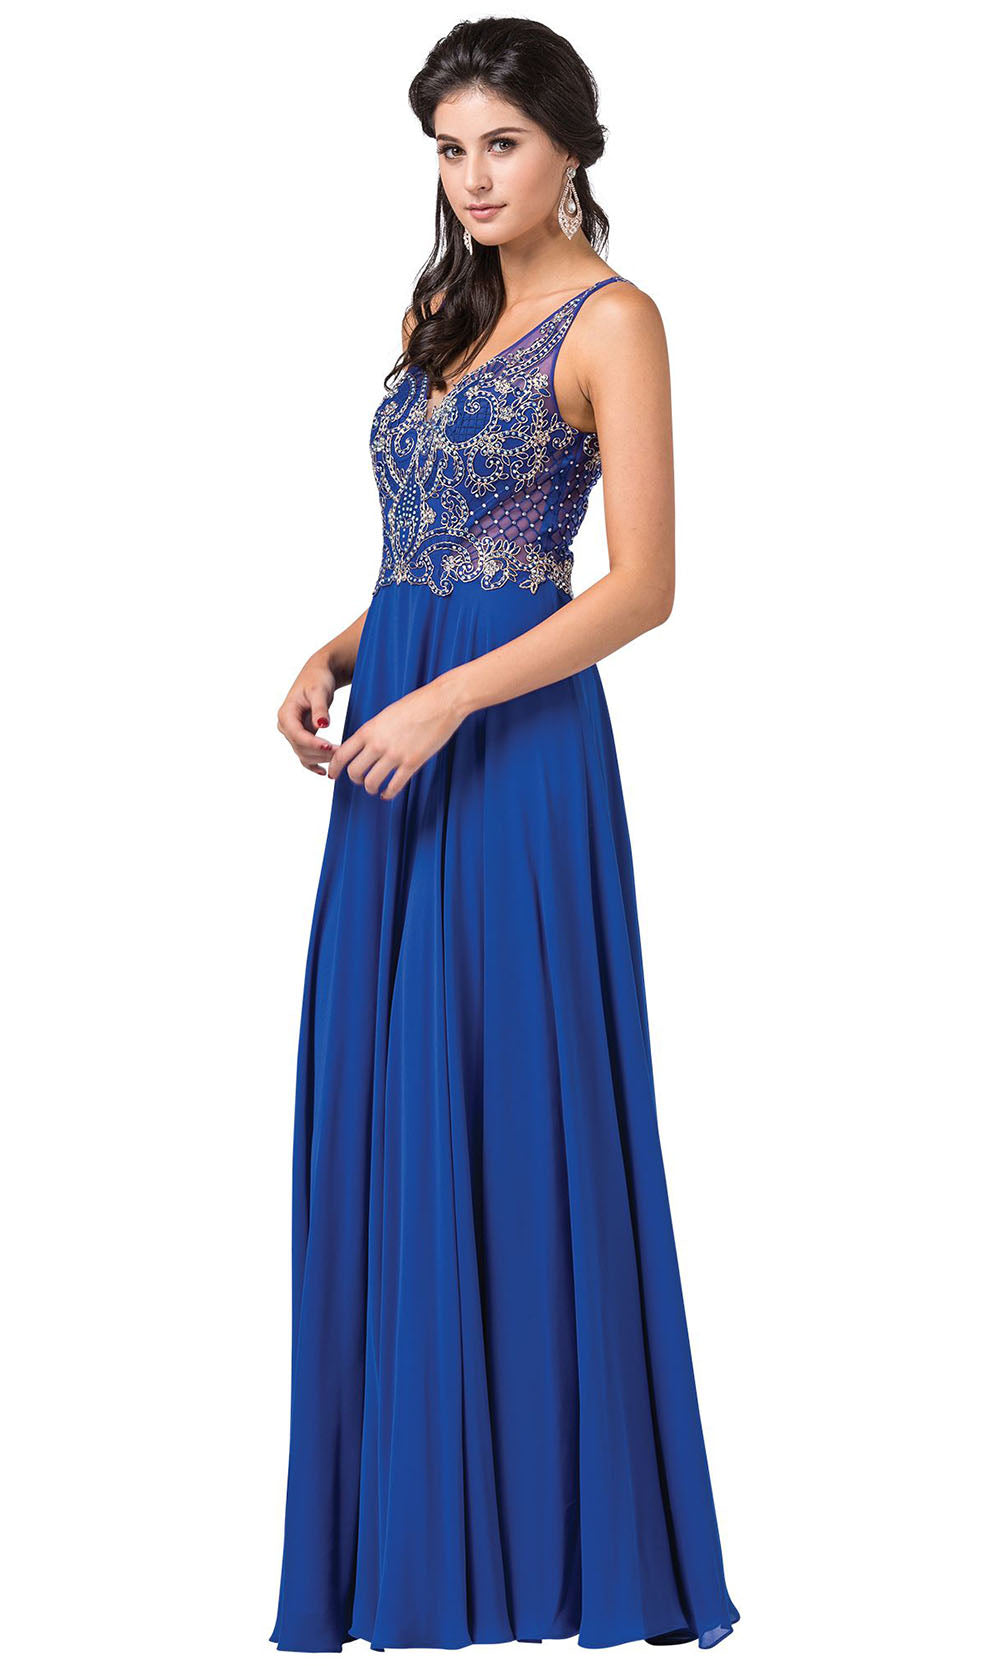 Dancing Queen - 2647 Jeweled Applique A-Line Dress In Blue